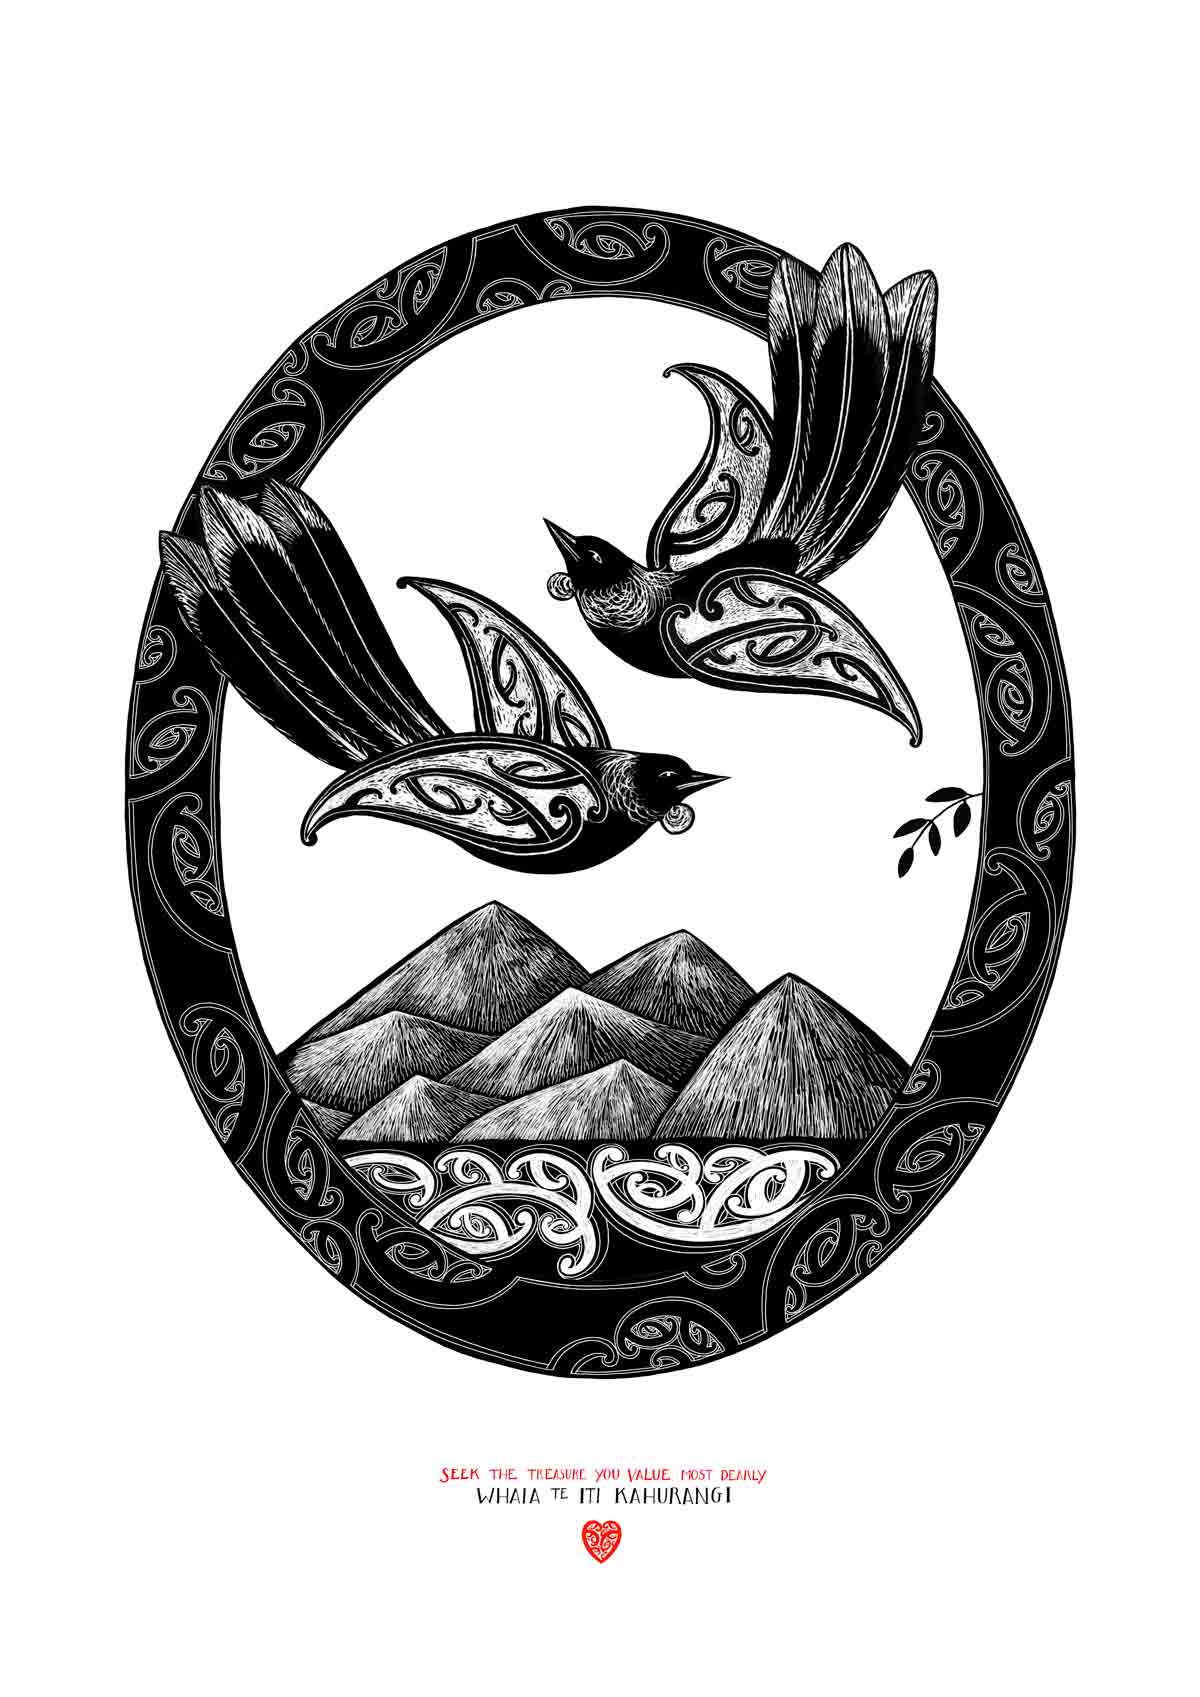 Tui art print with maori design birds and sea. Te reo maori with english translation, whaia te iti kahurangi - seek the treasure you value most dearly. Limited edition nz art print by Amber Smith